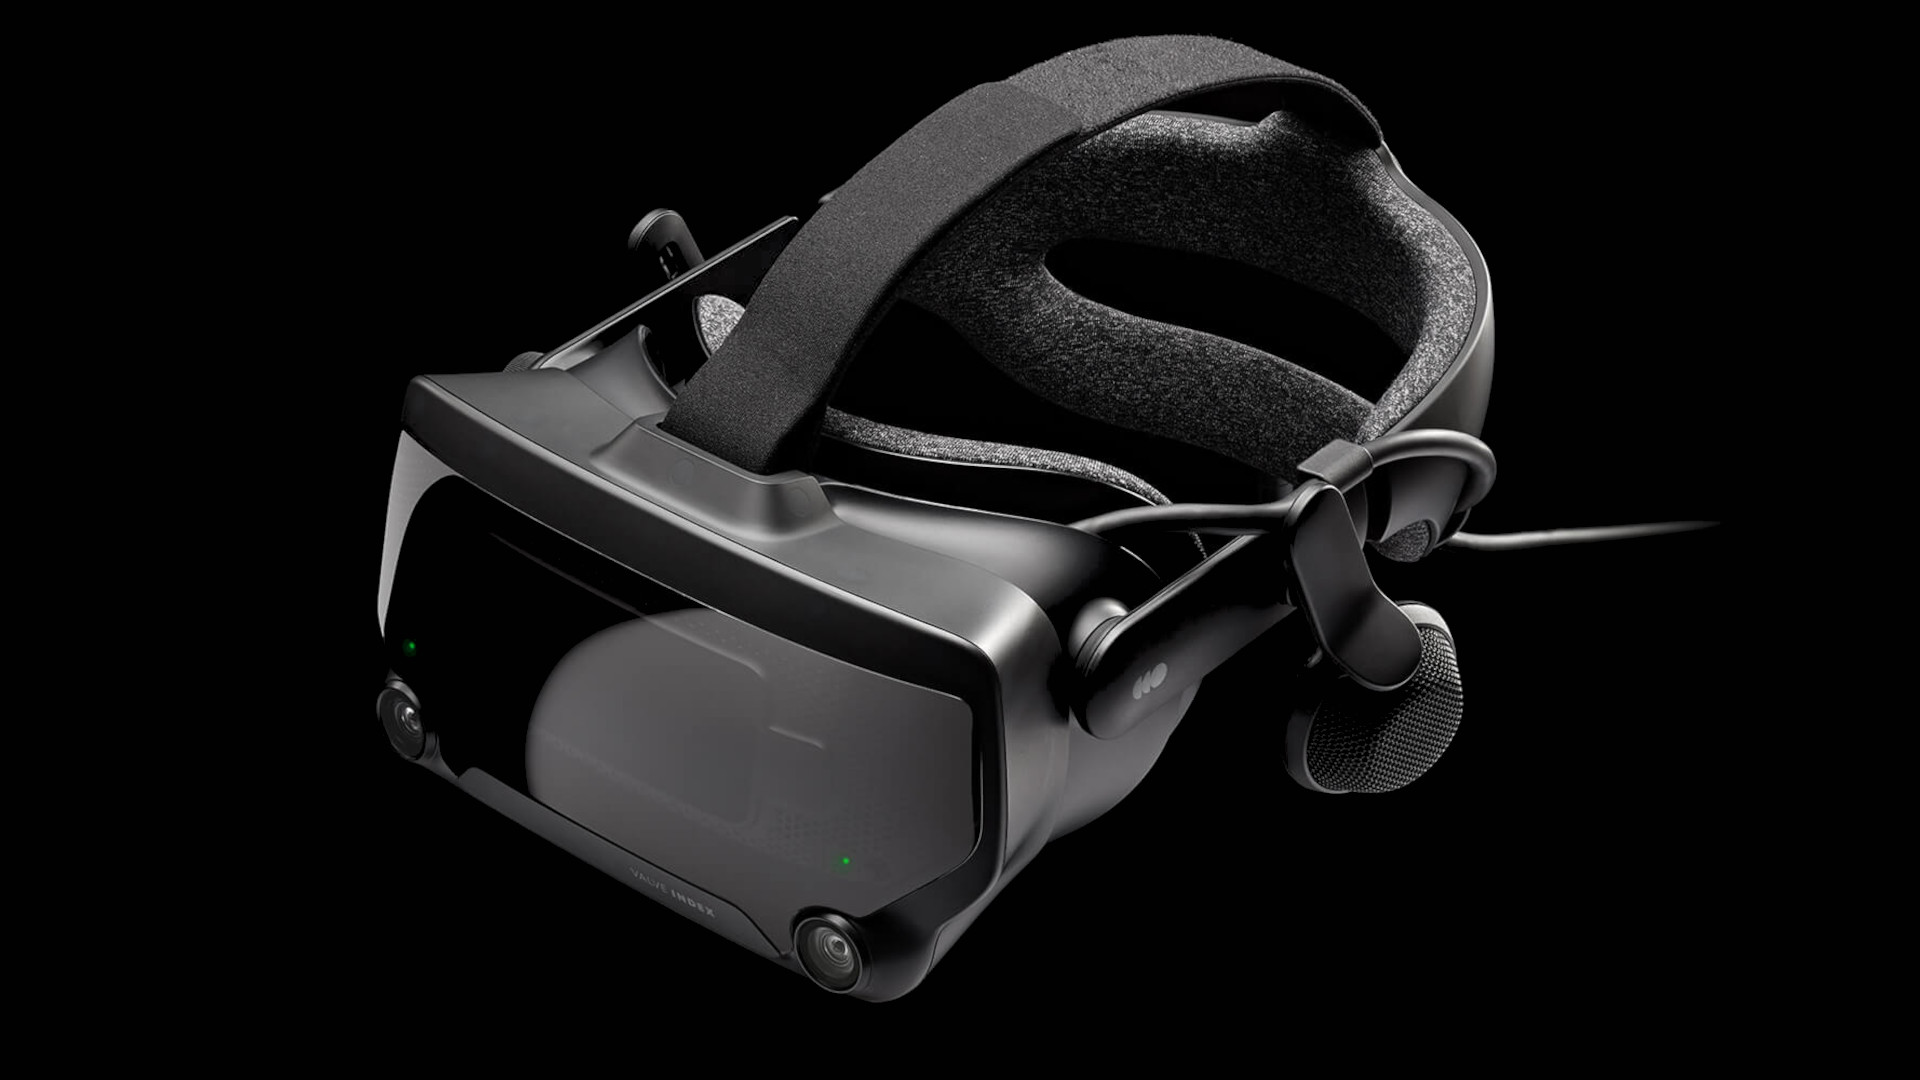 Valve SteamVR data mine hints at a new wireless VR headset codenamed 'Deckard'